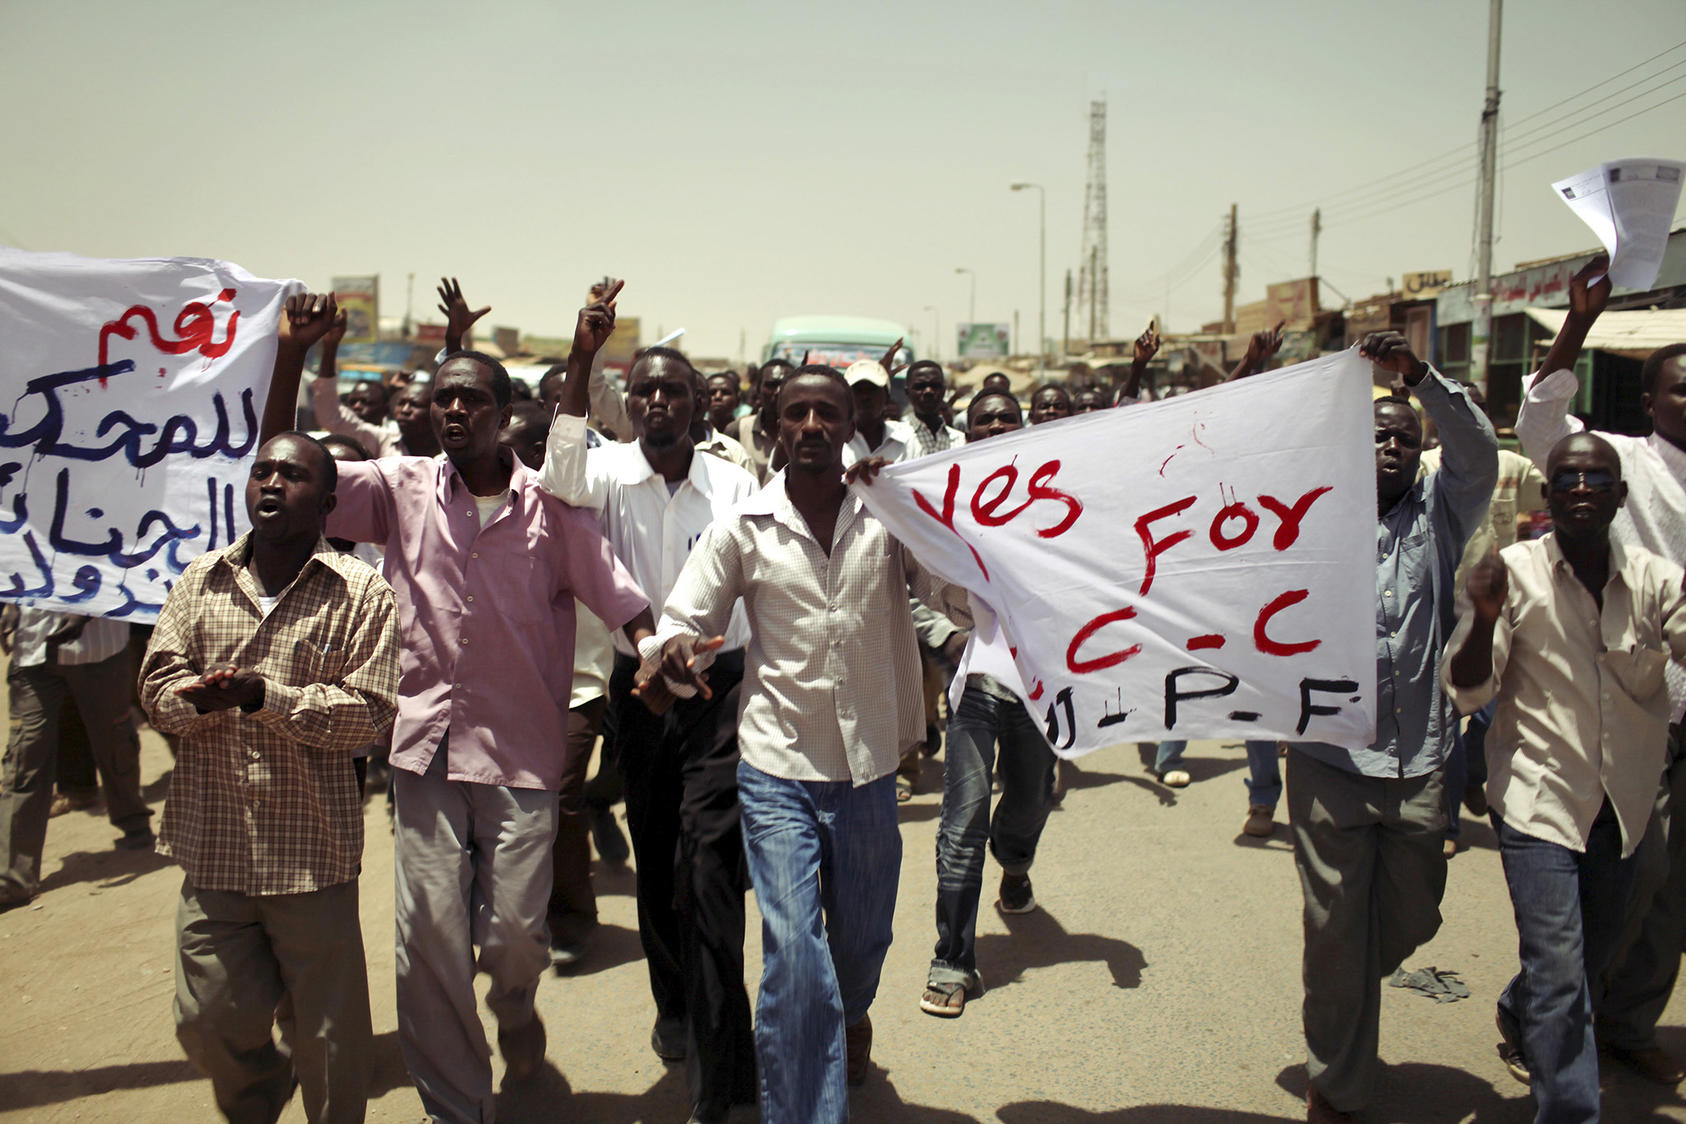 Darfurian men protest against dictator Omar al-Bashir in the streets of Khartoum, Sudan, April 11, 2010. (Jehad Nga/The New York Times).